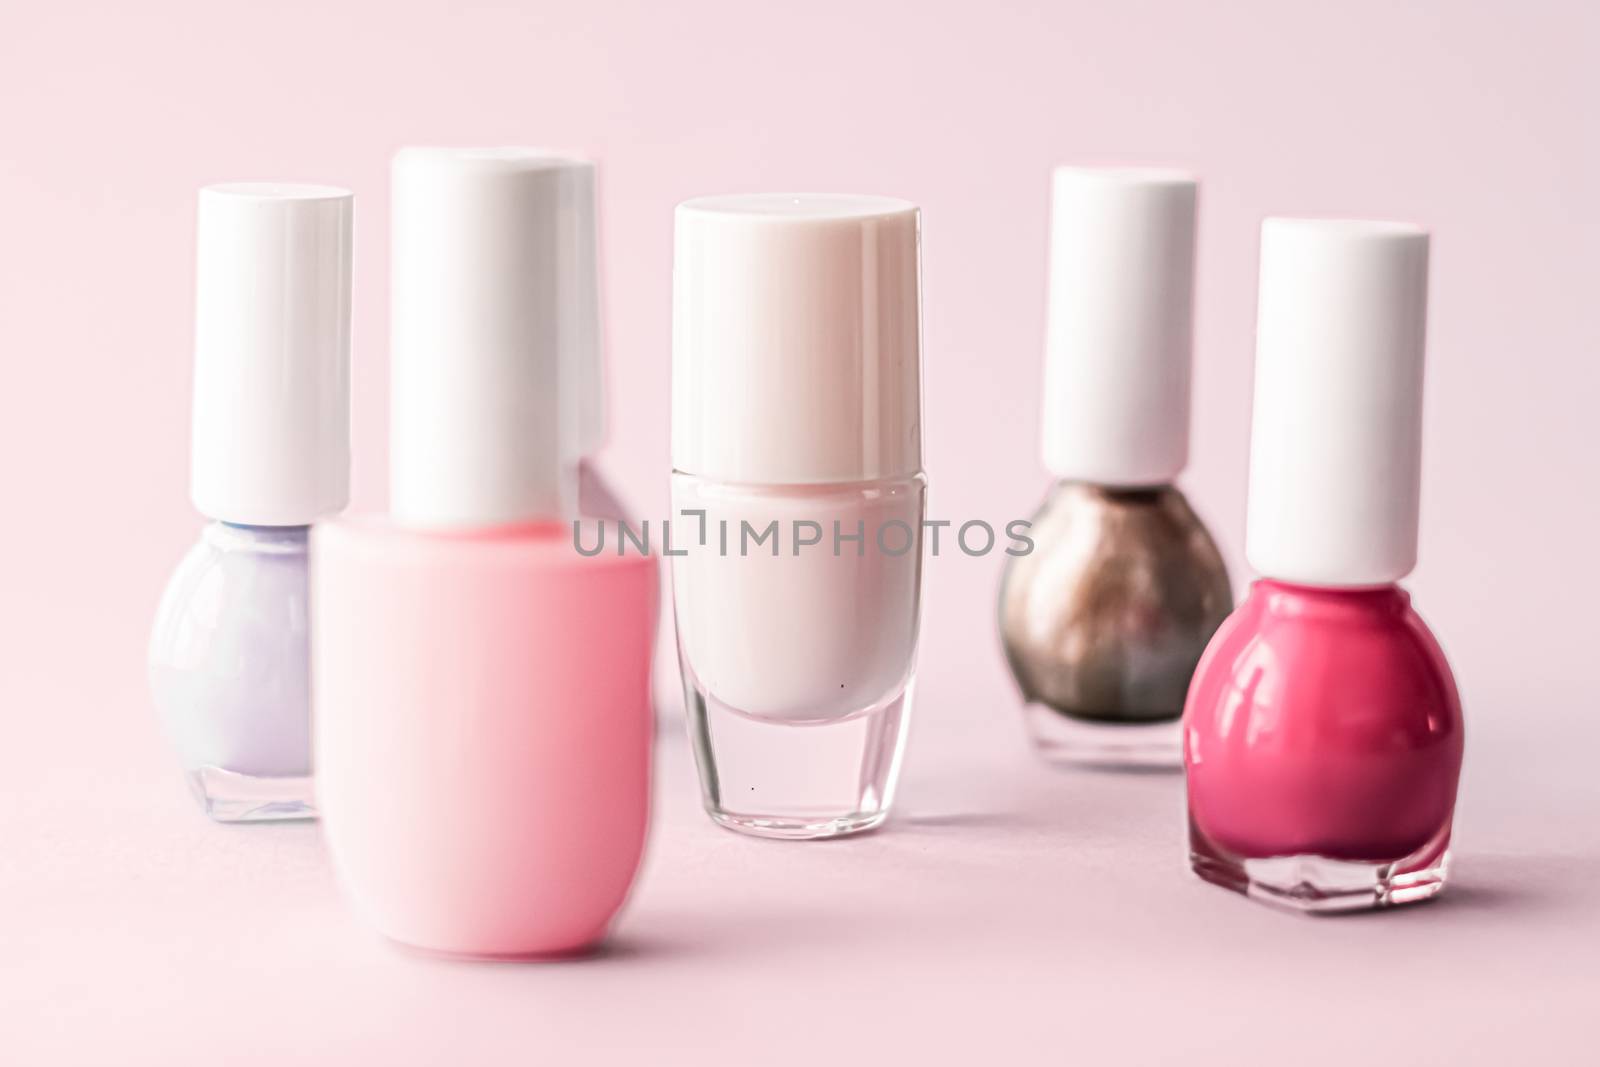 Nail polish bottles on blush pink background, beauty branding